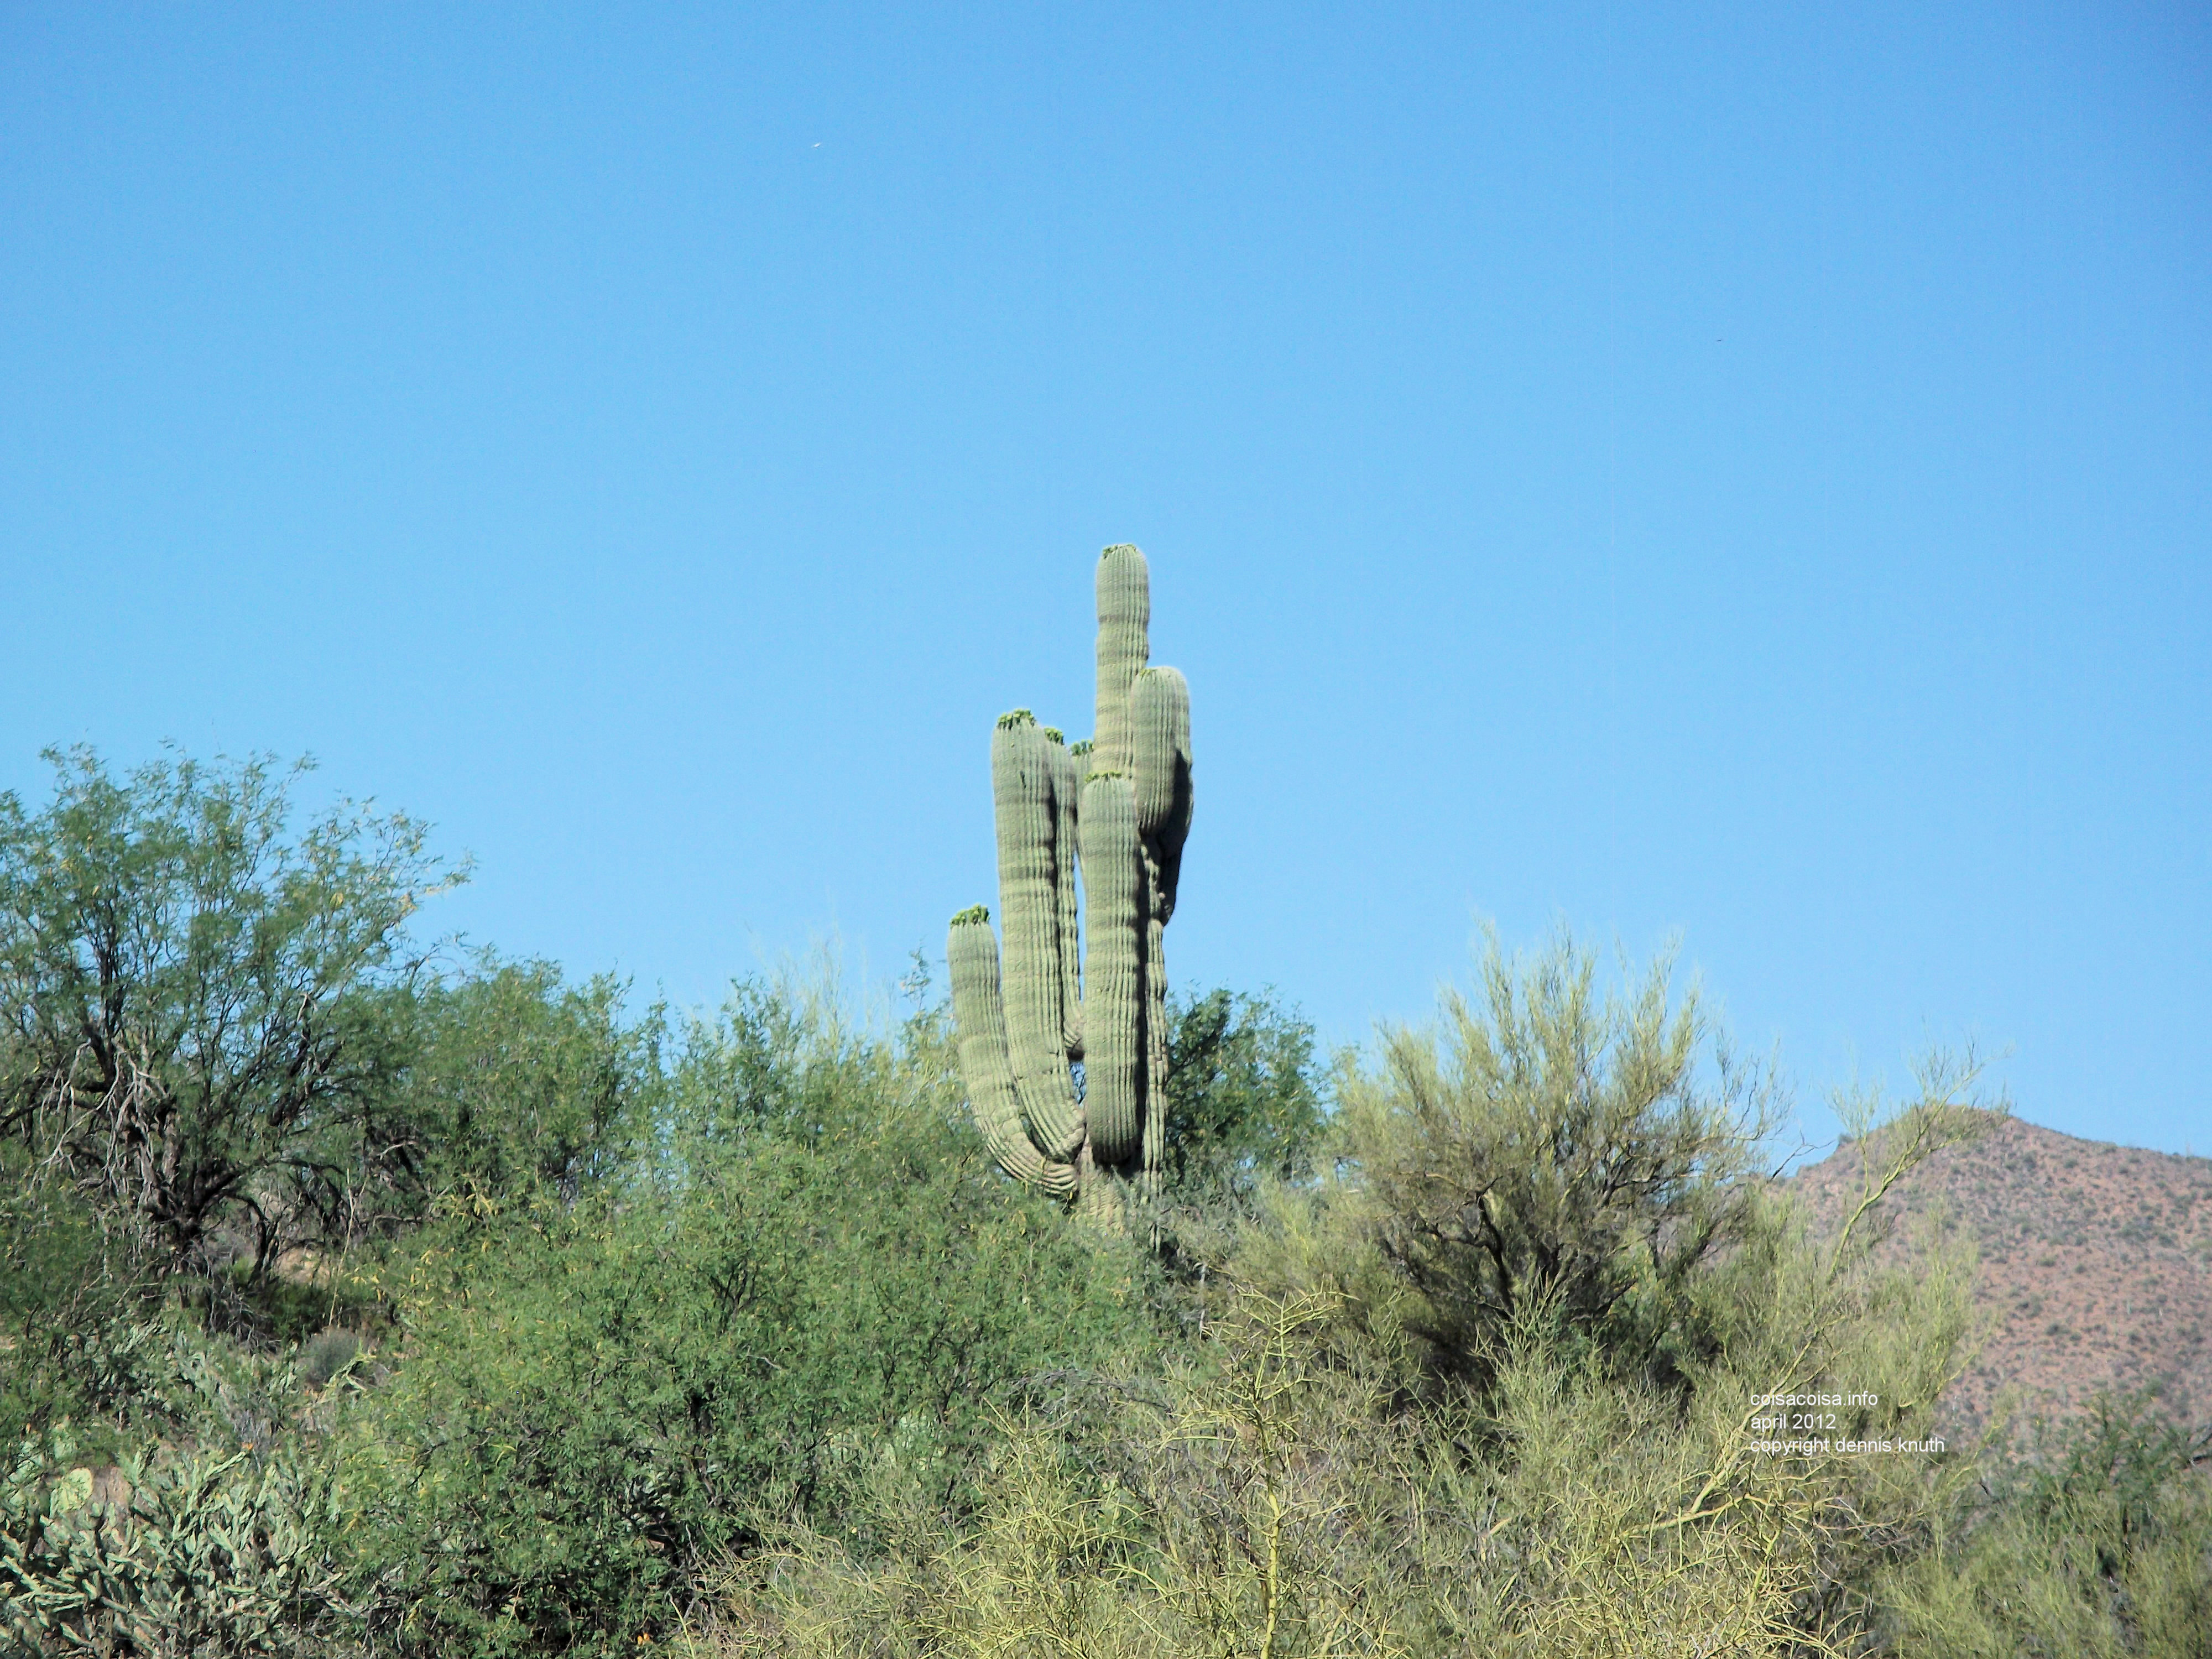 One single Saguaro Cactus dominates the horizon